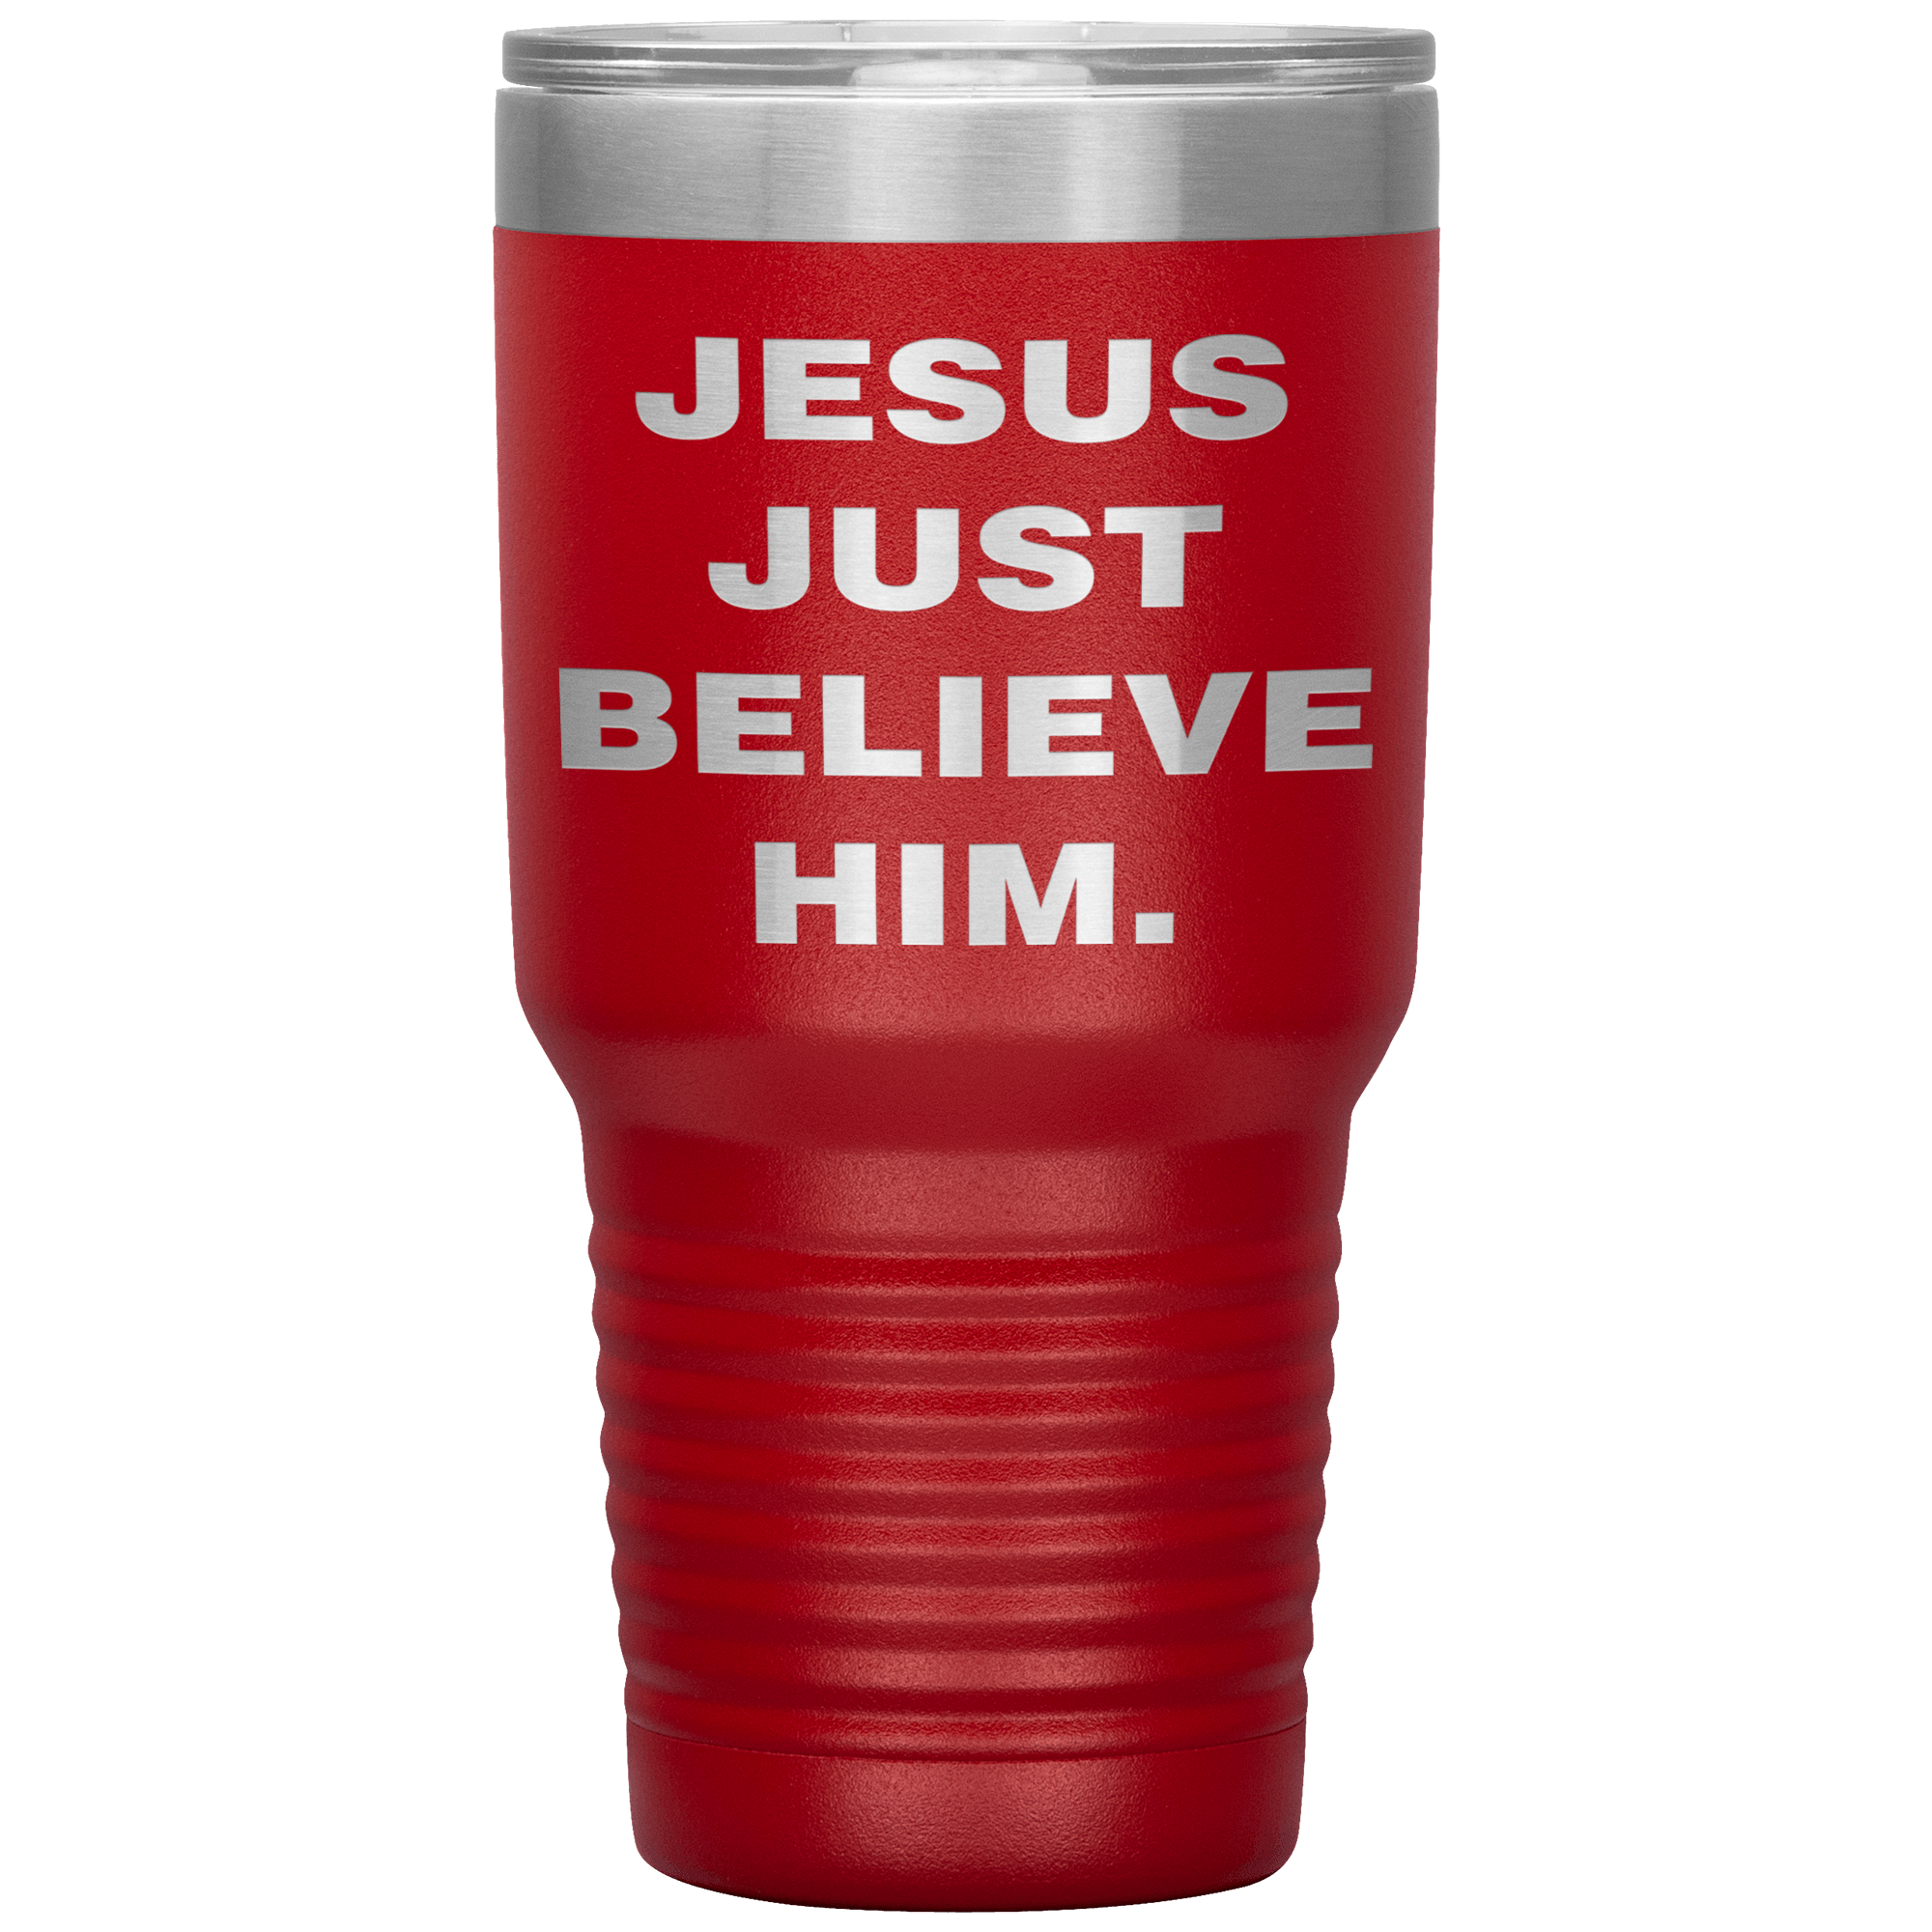 "JESUS JUST BELIEVE HIM" Tumbler